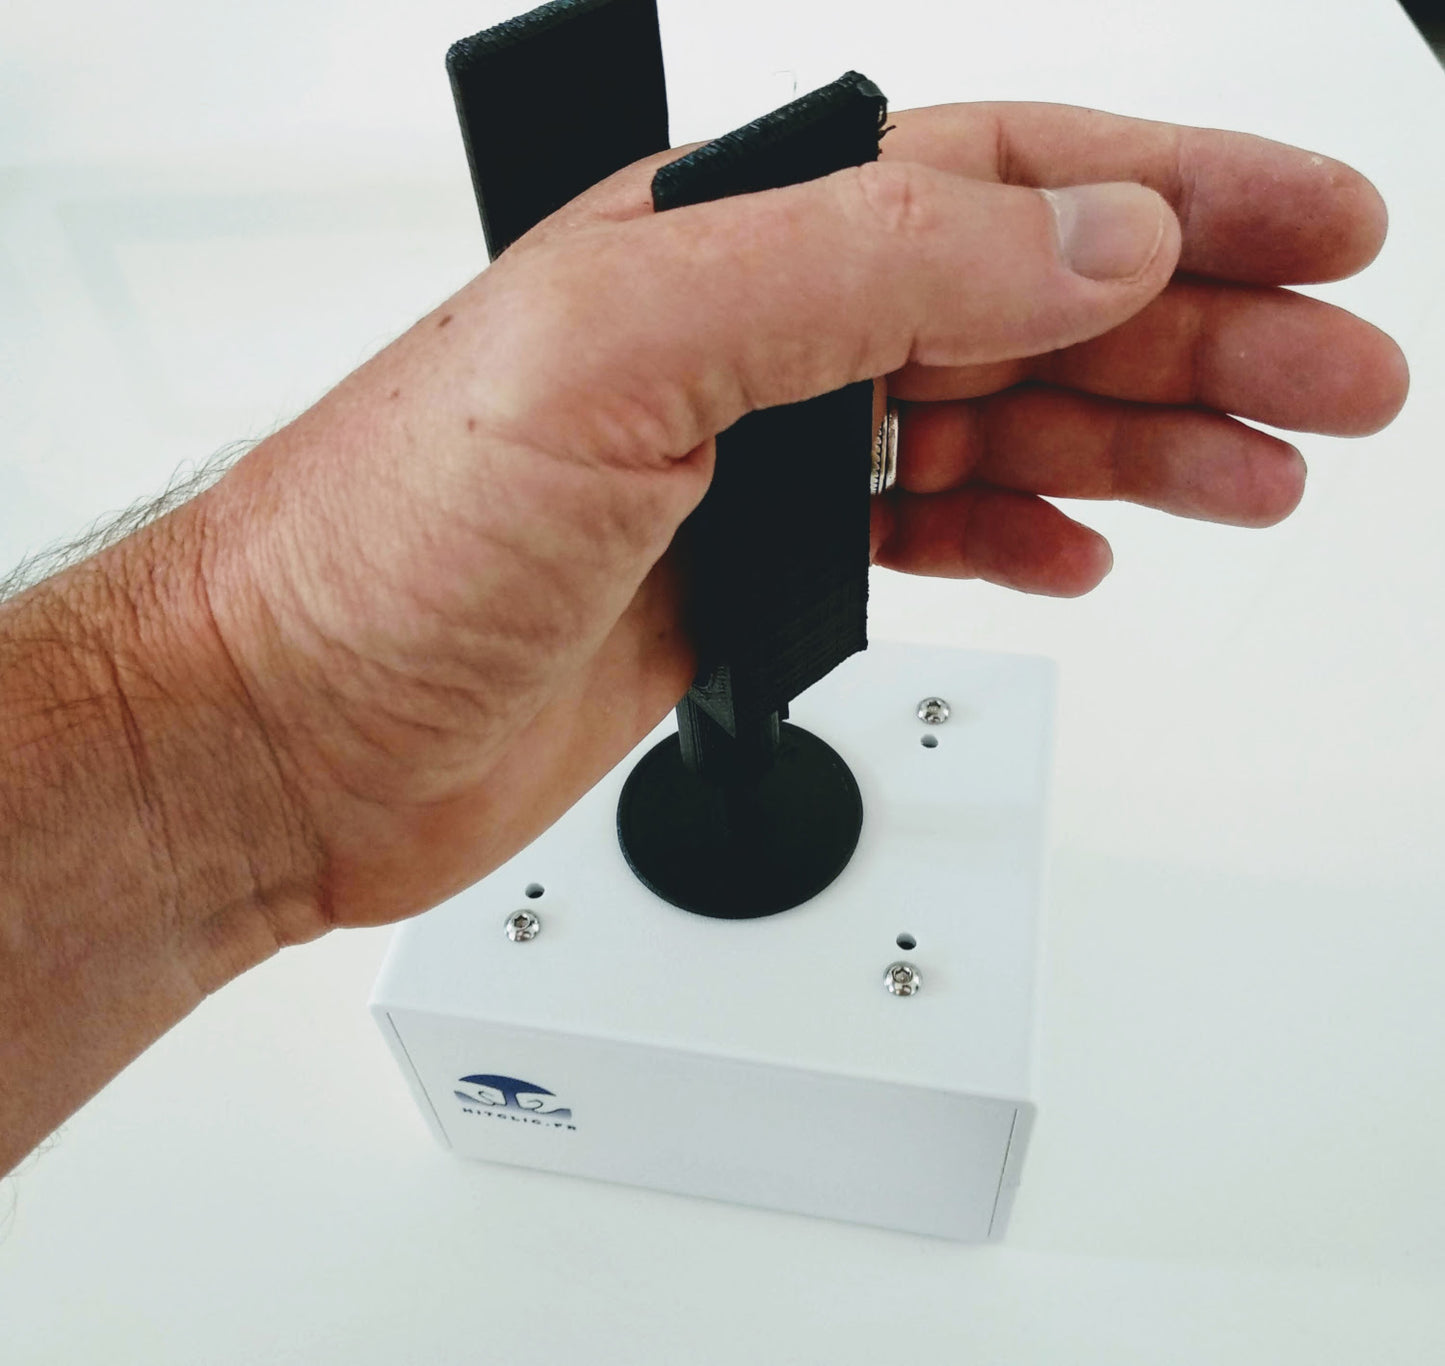 Arcade joystick for Sony Access - ergonomic handle